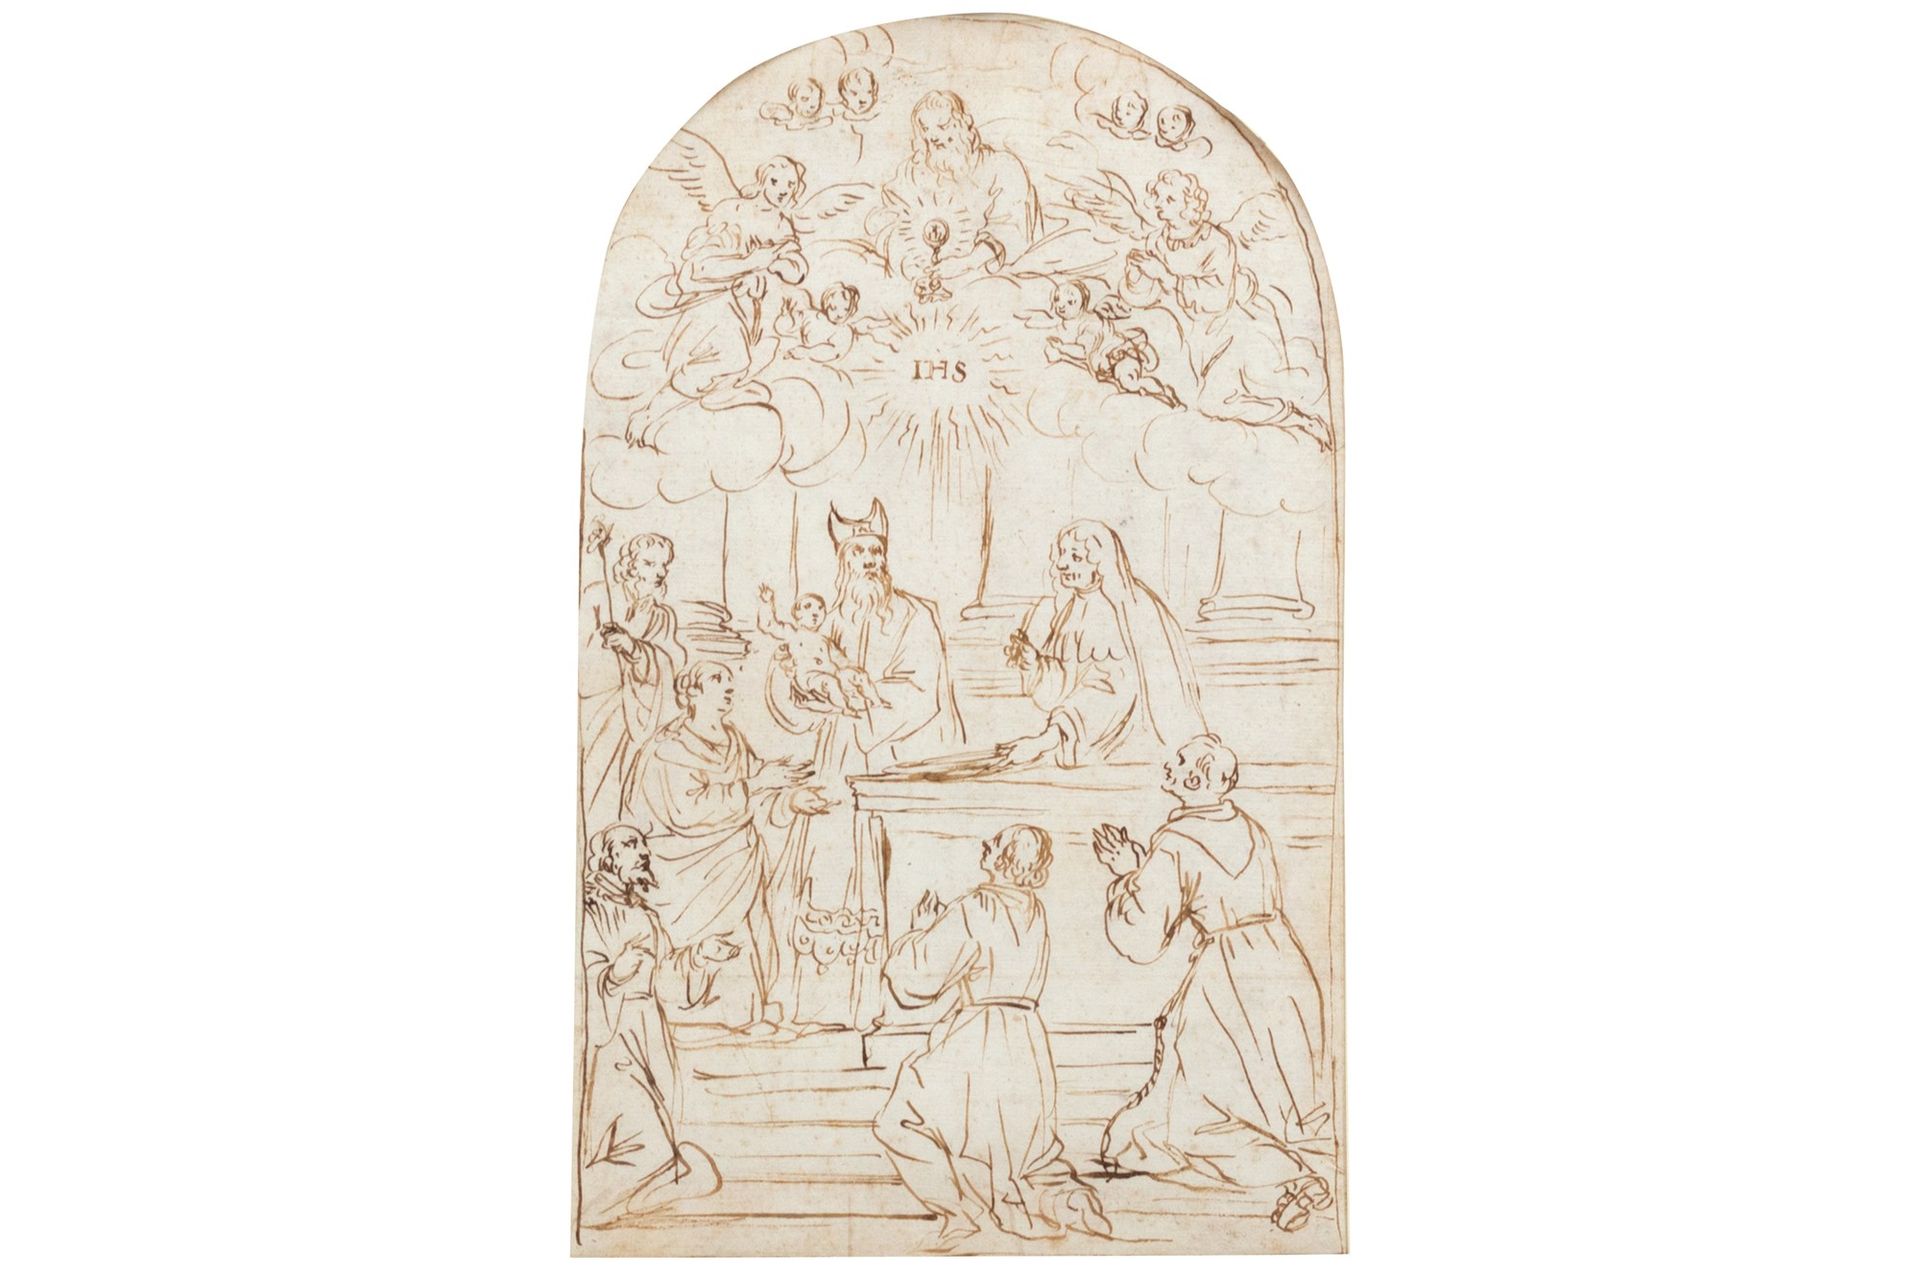 Scuola veneta, secolo XVII 耶稣在圣殿中的呈现

纸上钢笔和棕色墨水
287 x 174 mm
，顶部为拱形。